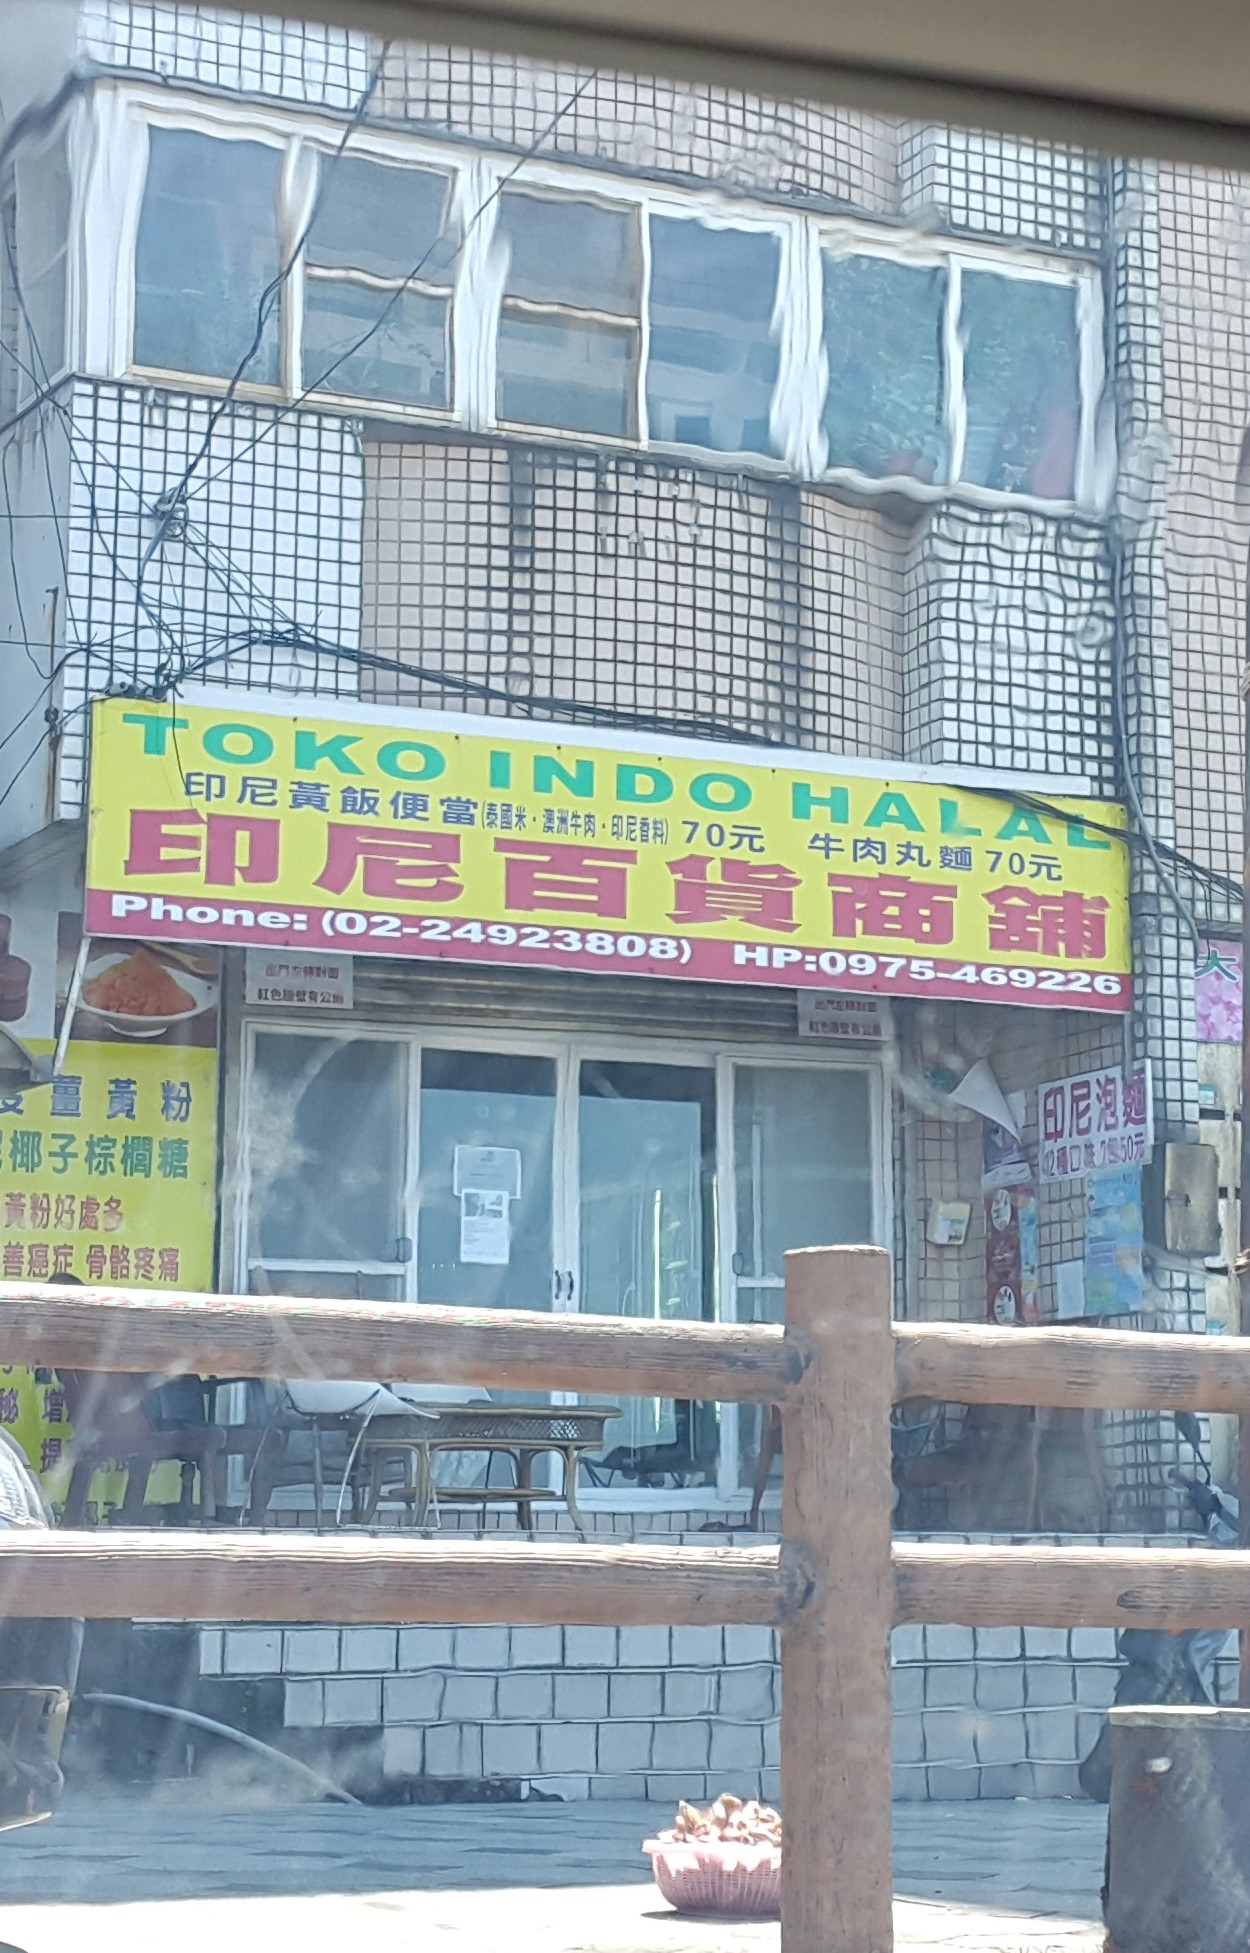 Recently Added Place: Toko Indo Halal Yehliu